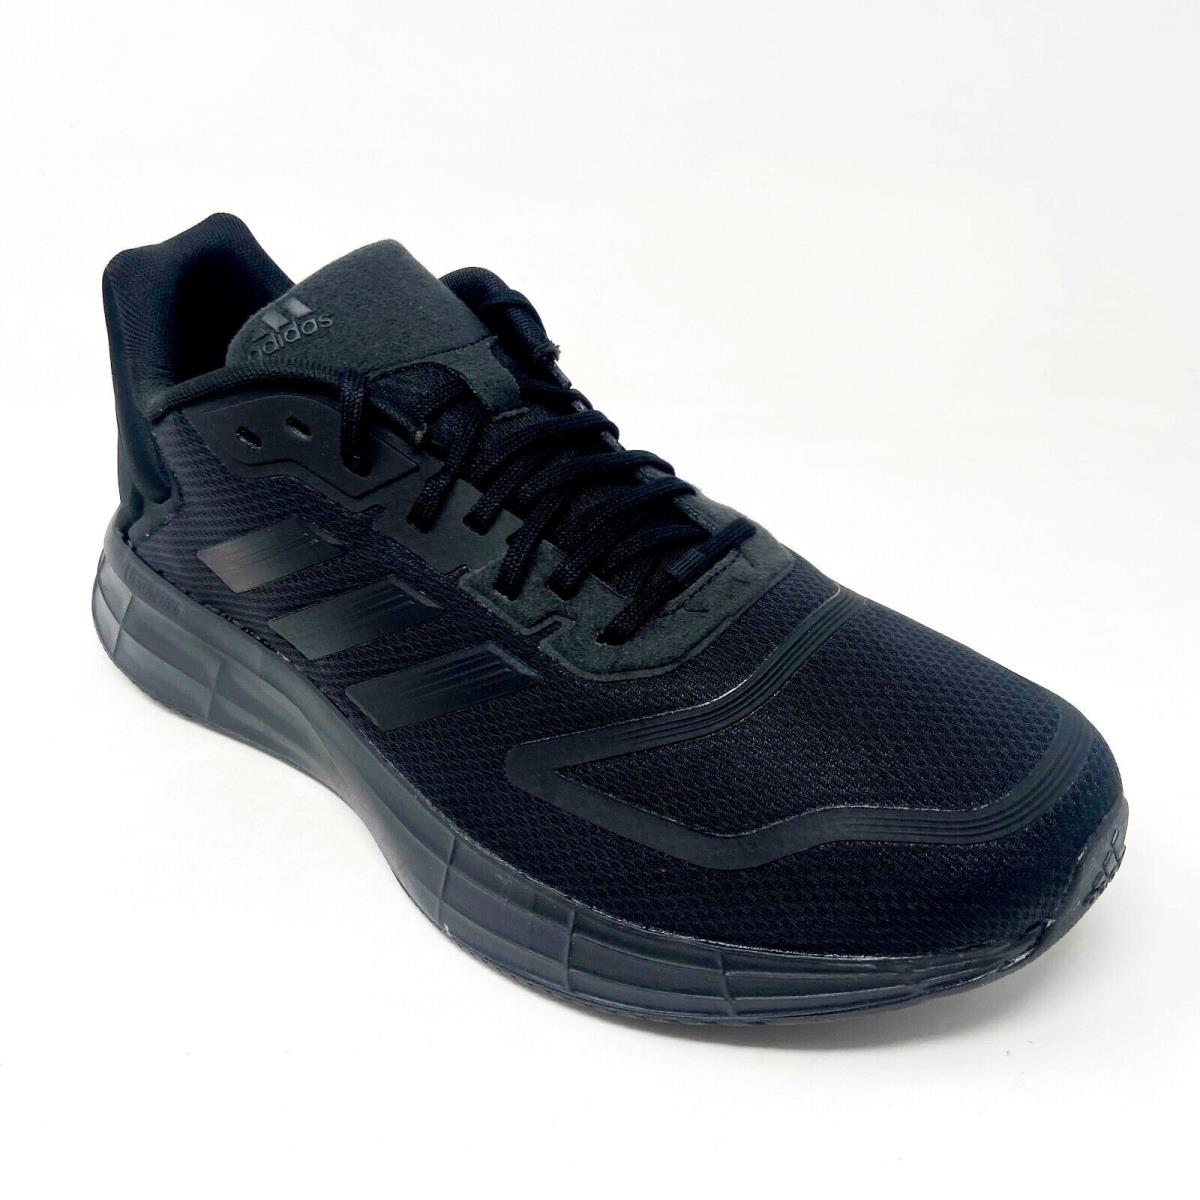 Adidas shoes Duramo - Black 0